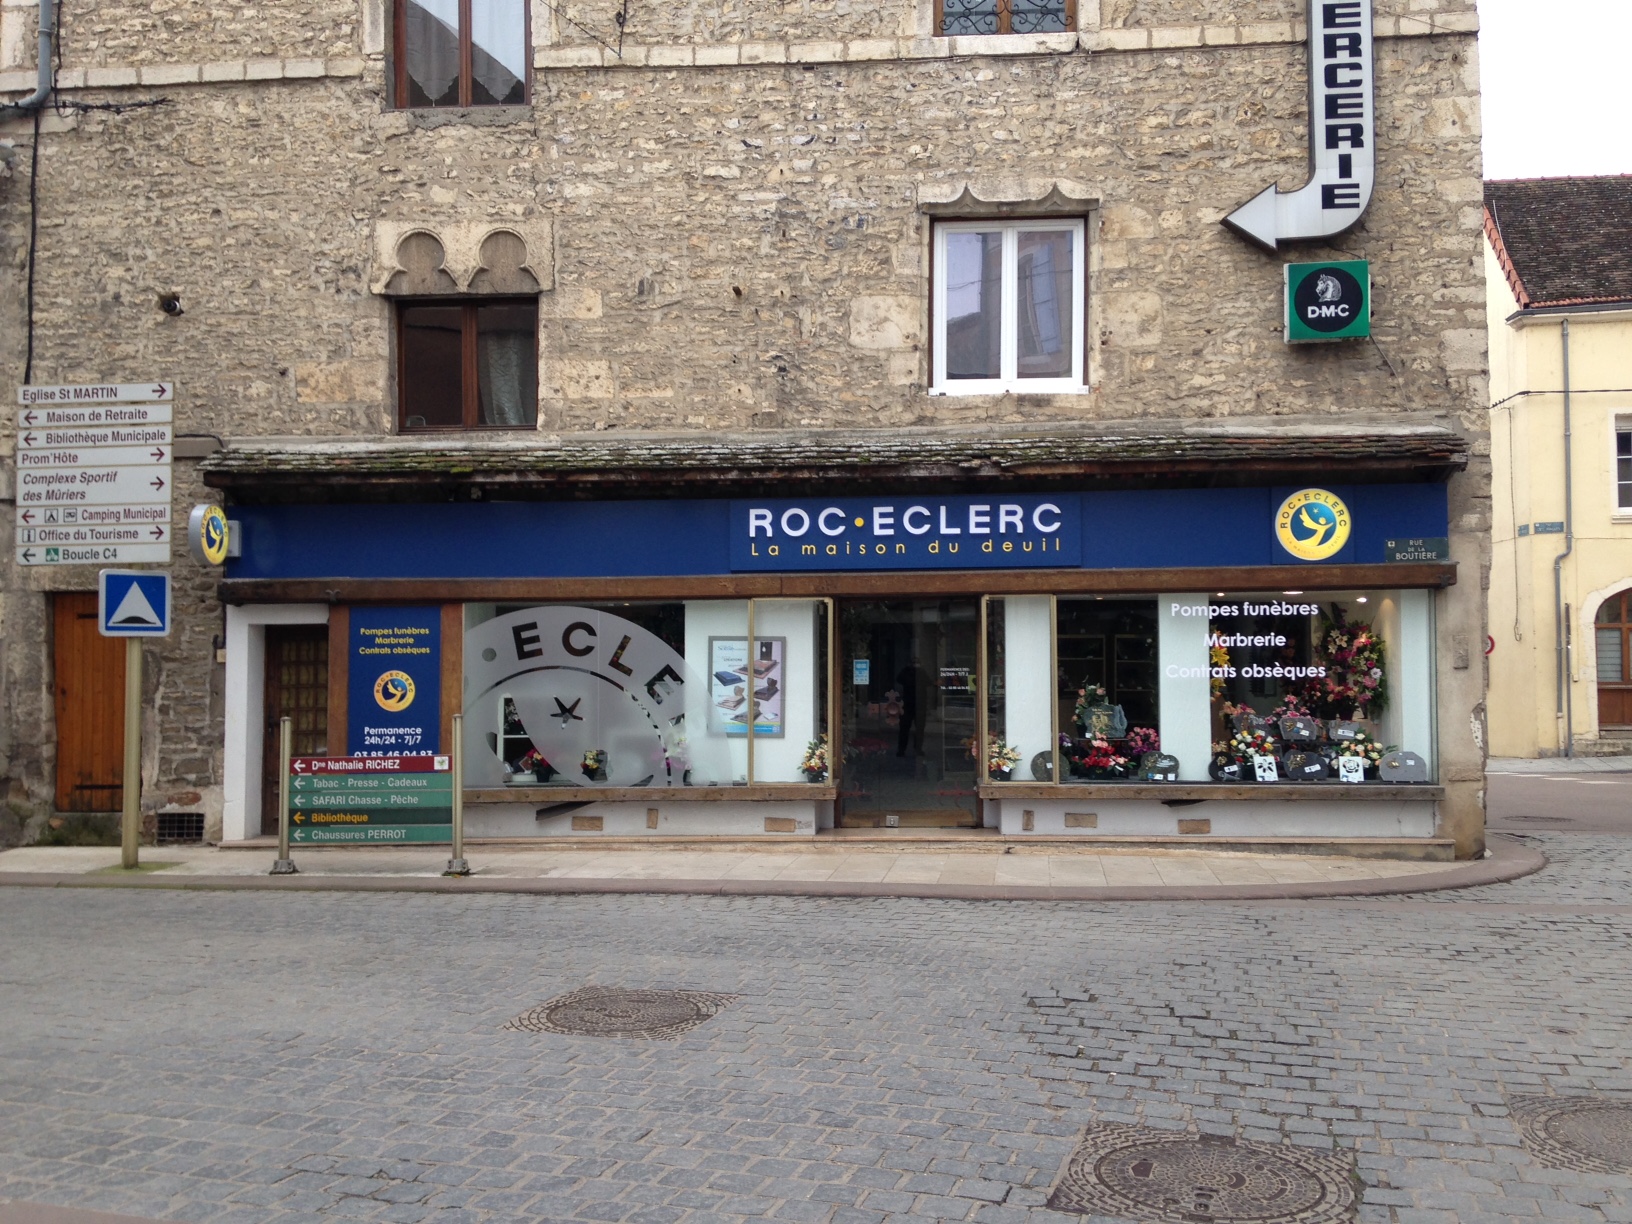 ROC-eclerc-Chagny-devanture-roc-eclerc.jpg